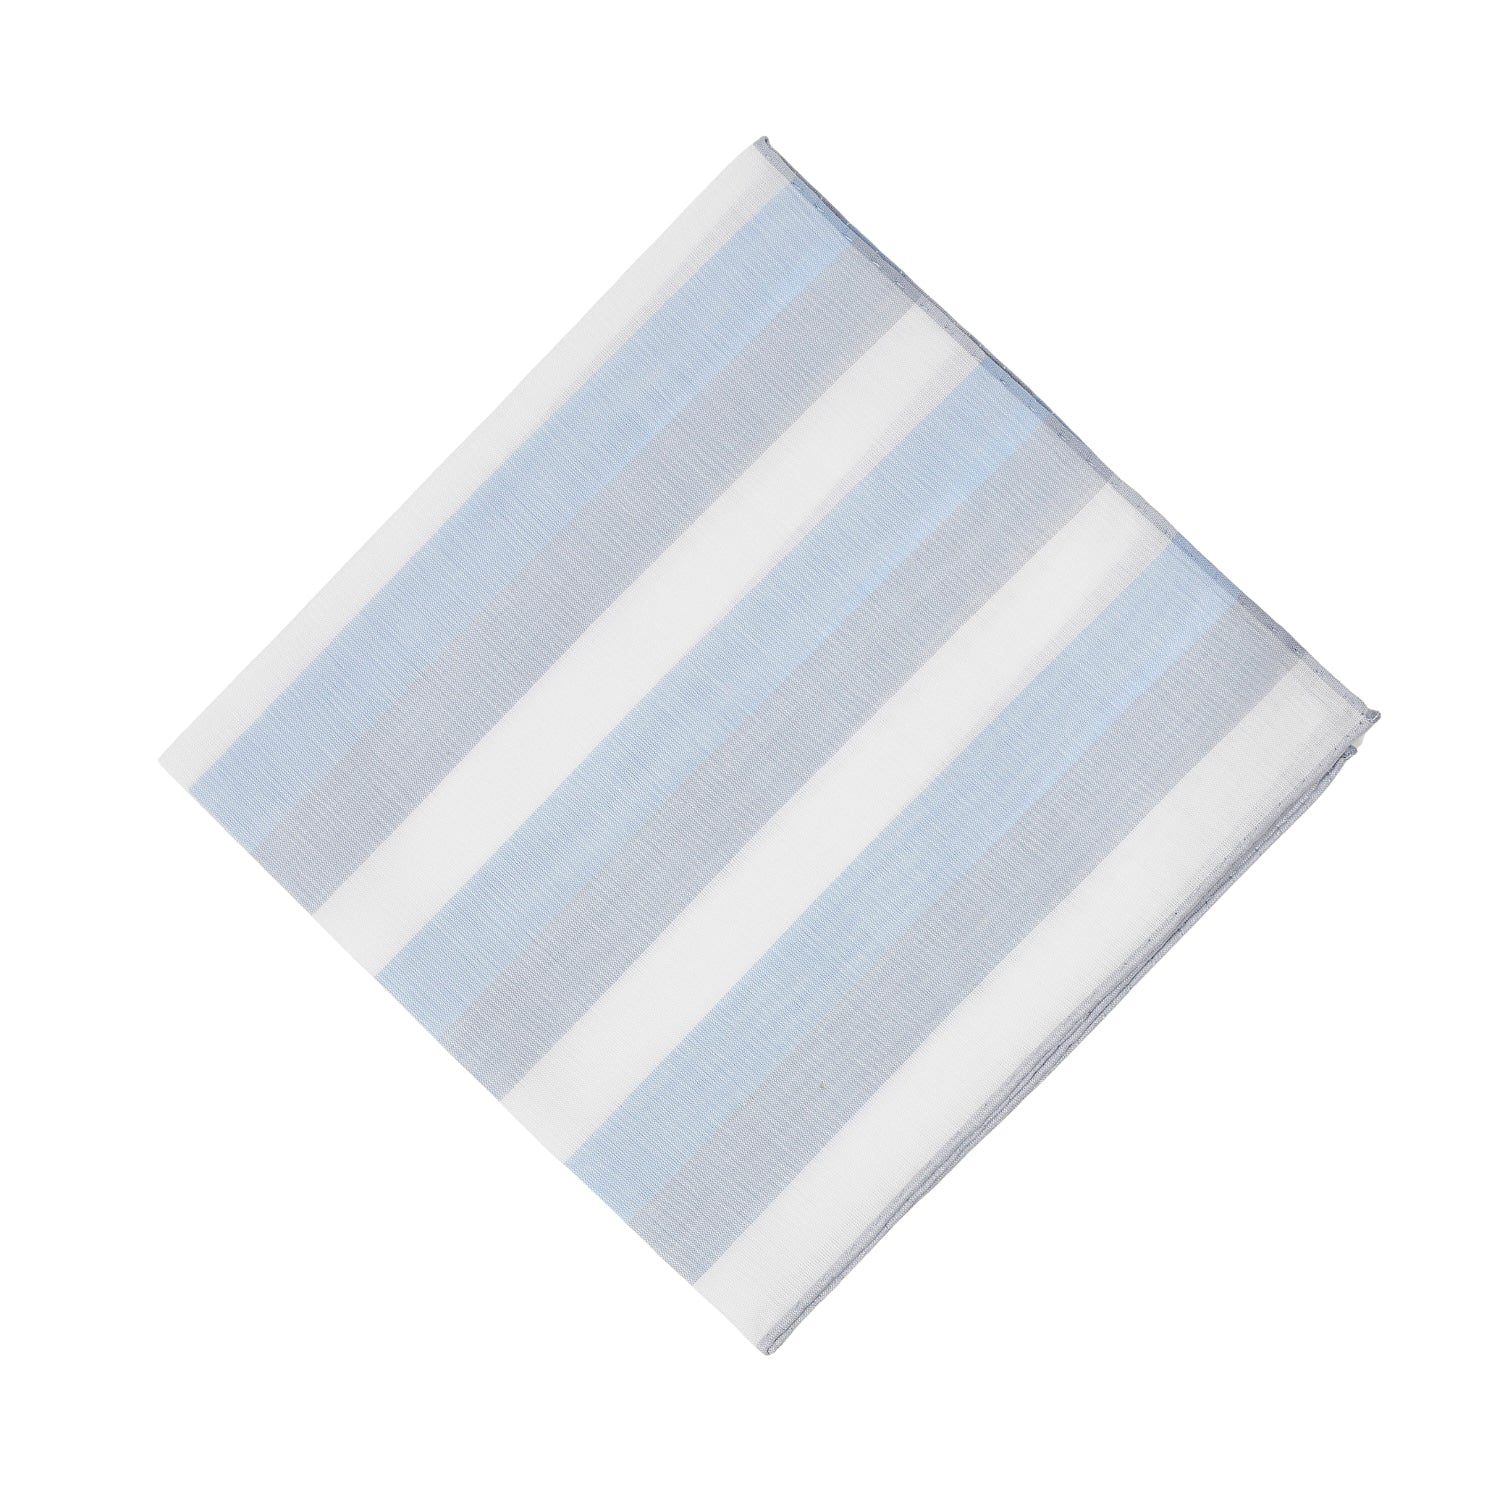 Simonnot Godard White Blue & Grey Striped Cotton Pocket Square